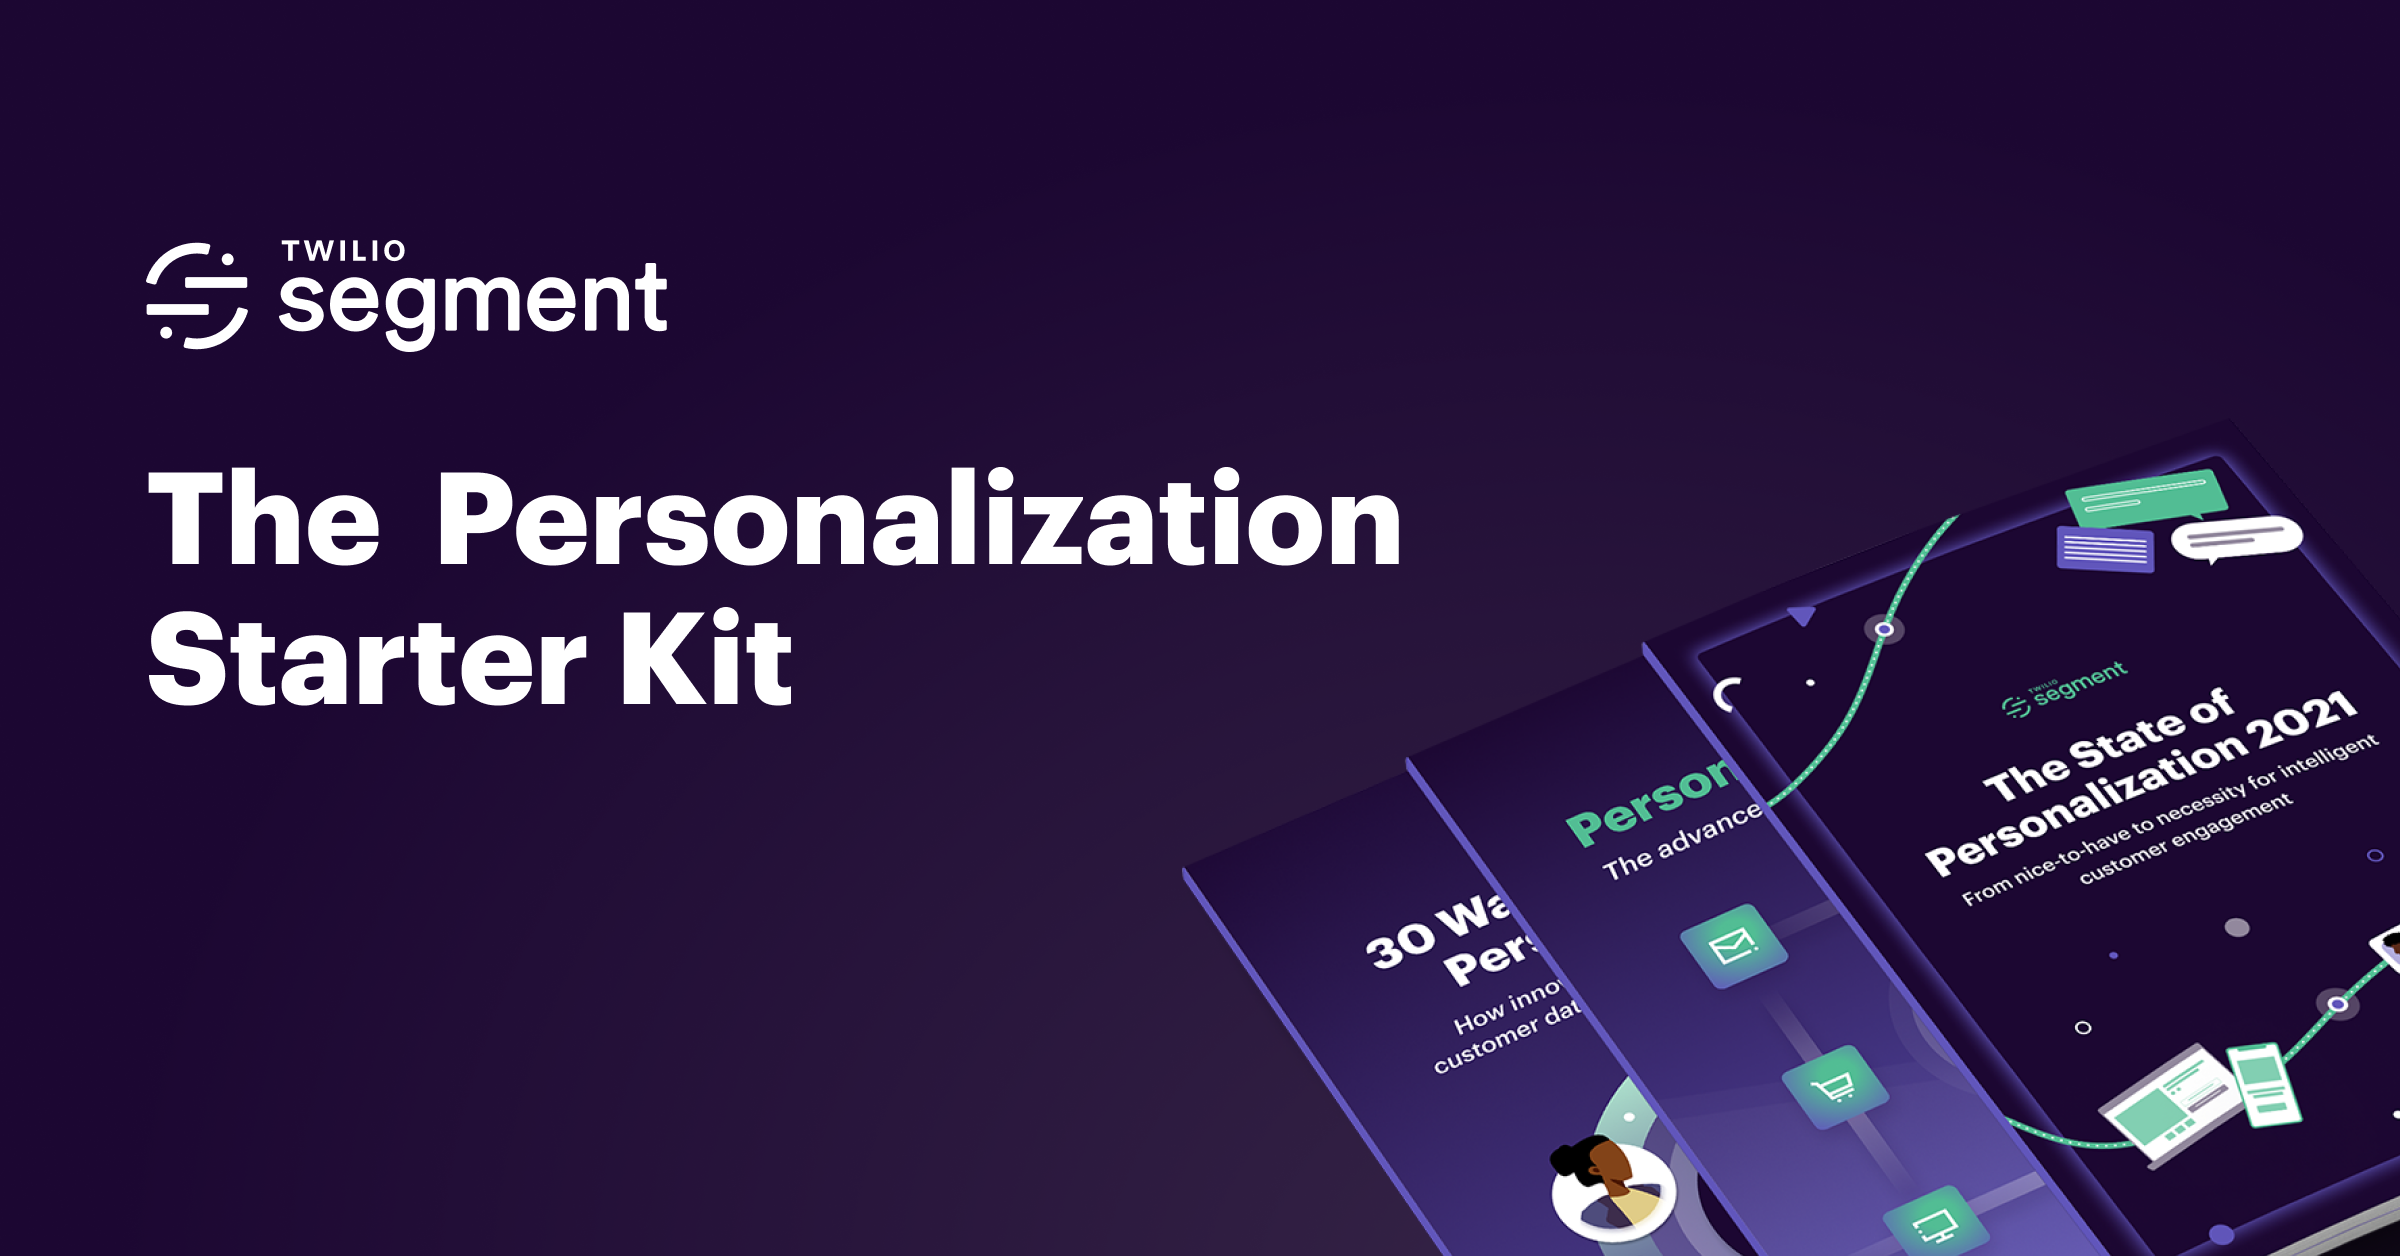 The Personalization Starter Kit